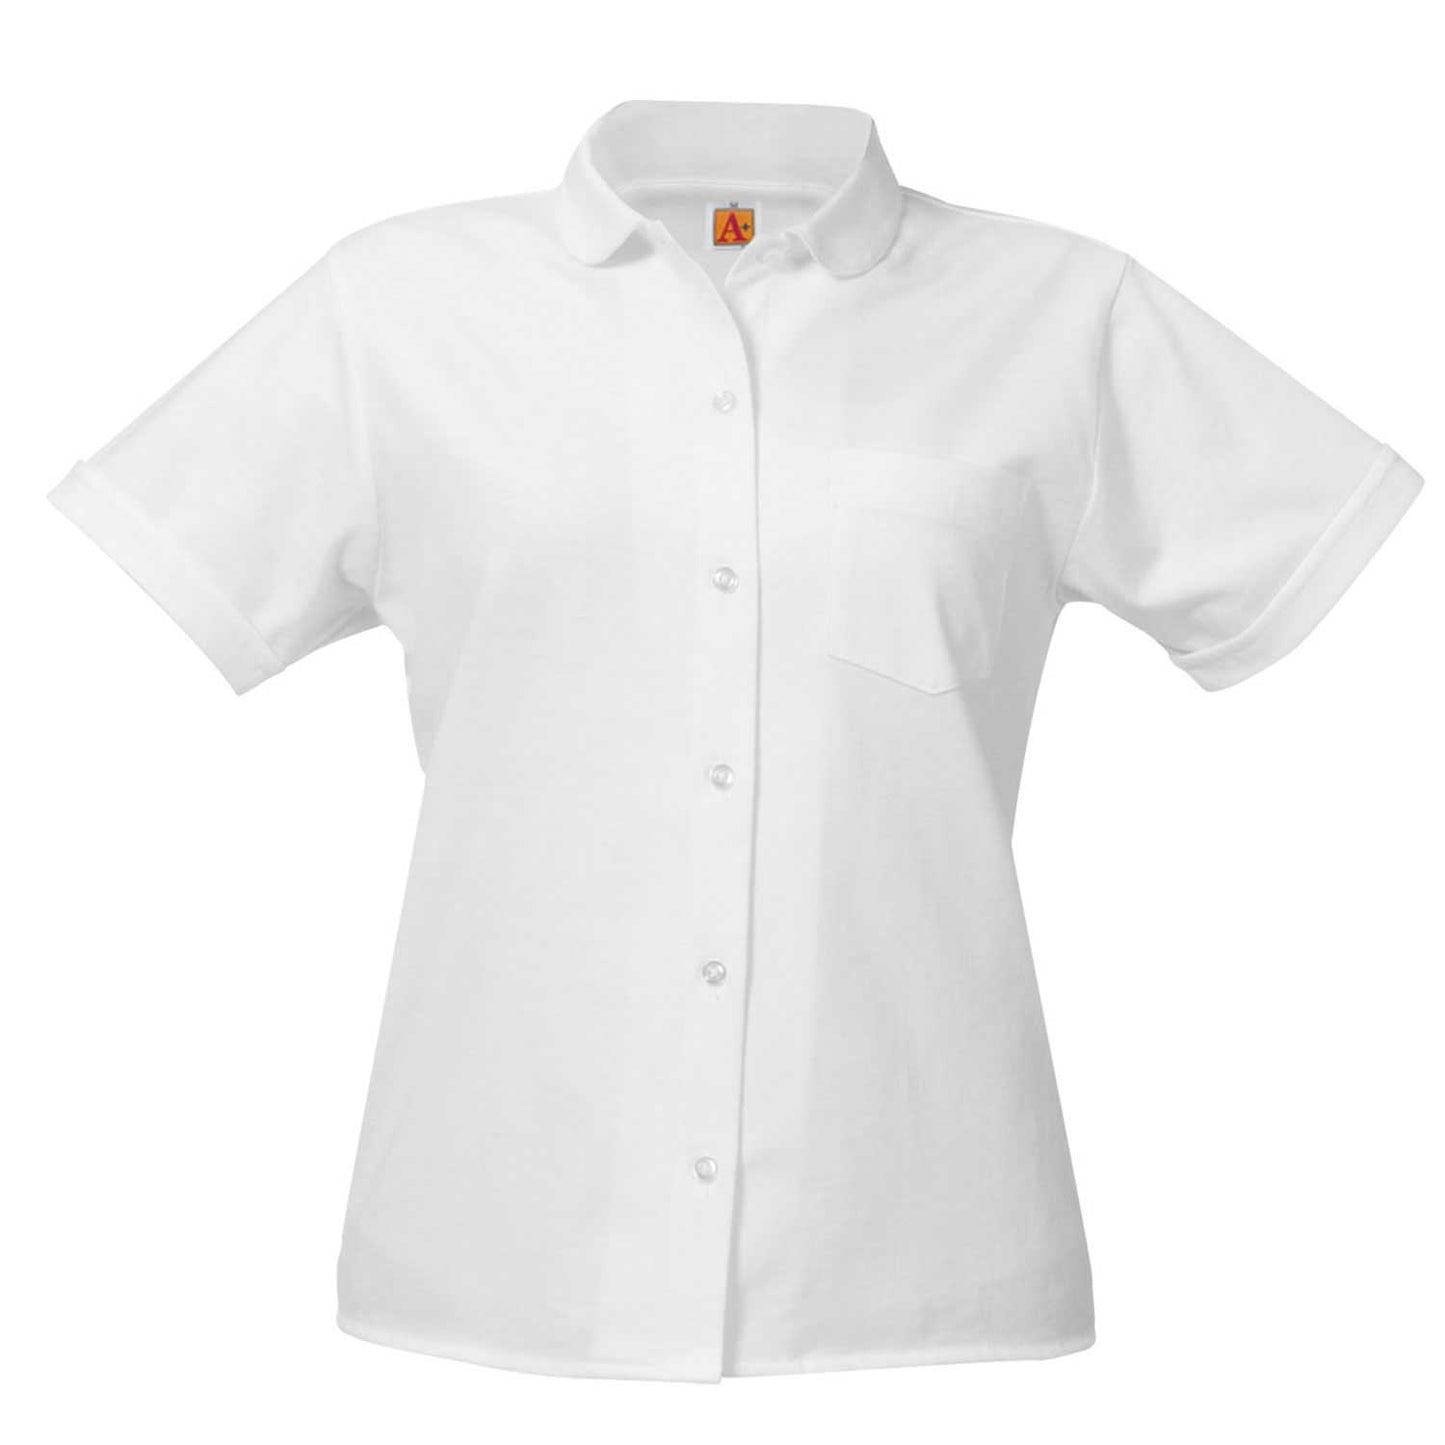 Jersey Knit Short Sleeve Shirt (Female) w/Logo - 1121